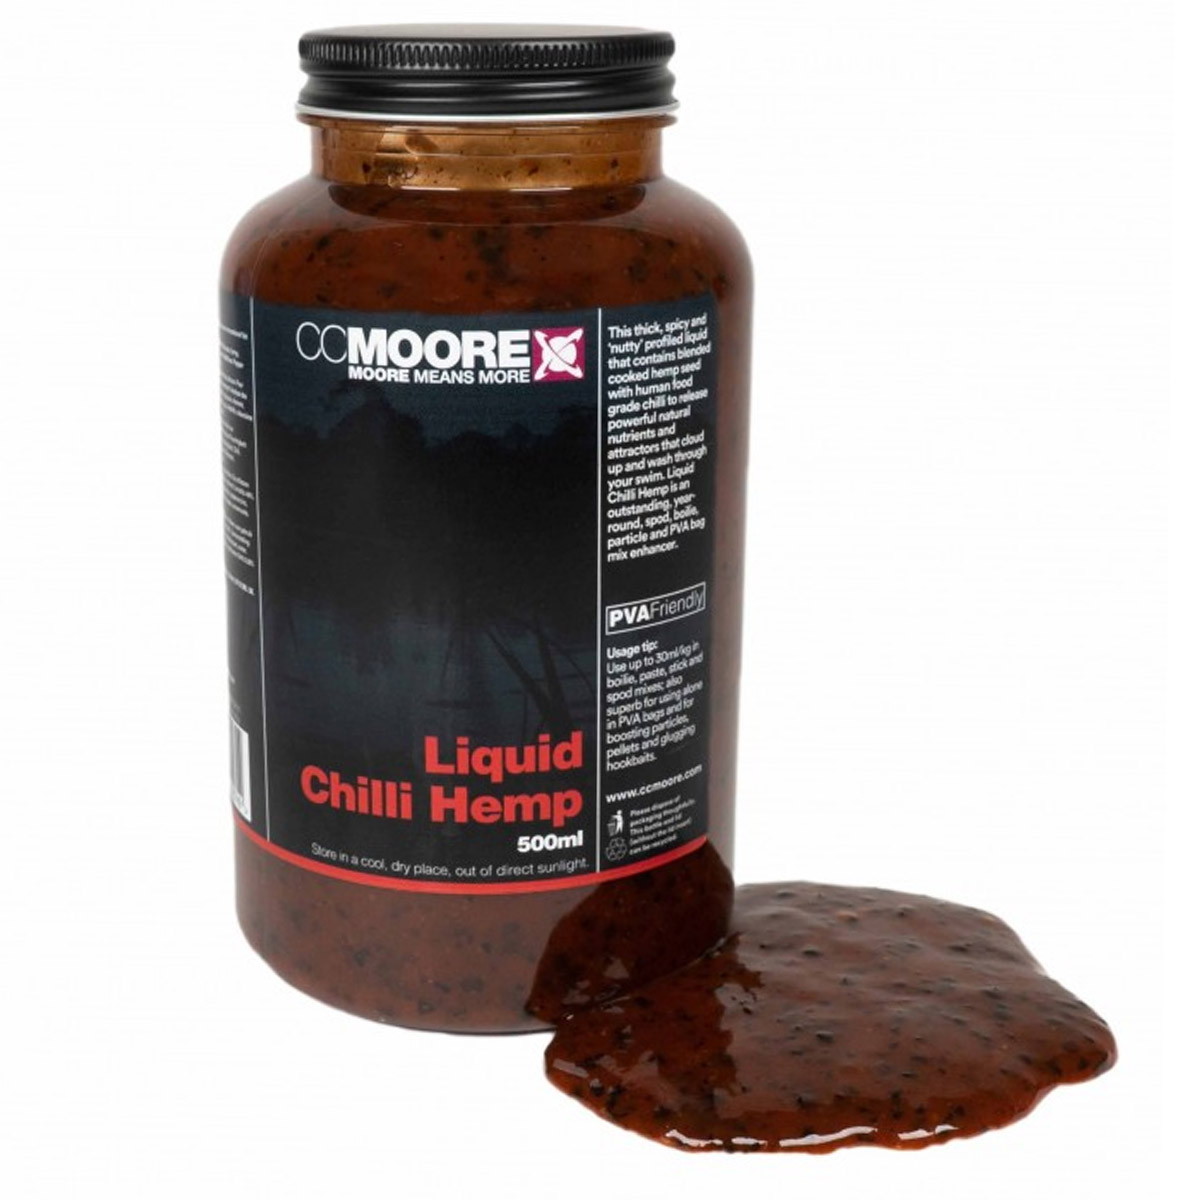 Cc Moore Liquid Chilli Hemp 500ml